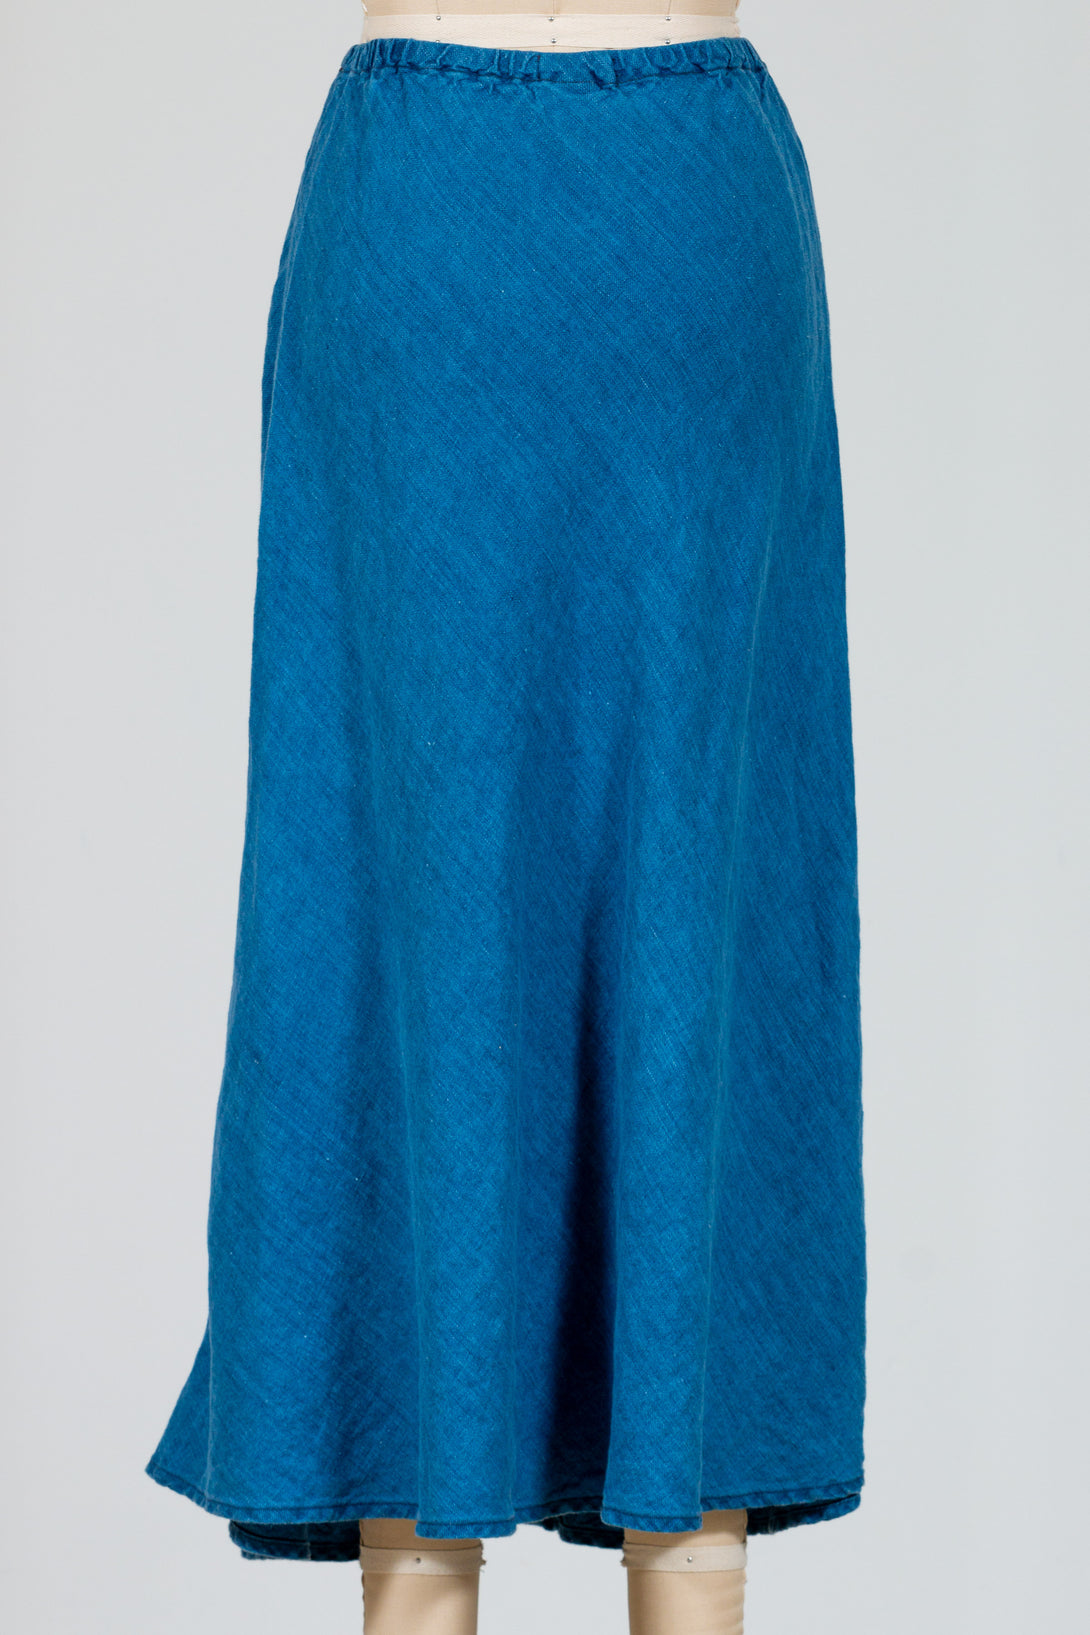 CPShades-Tanya-Skirt-Indigo-Blue-Linen